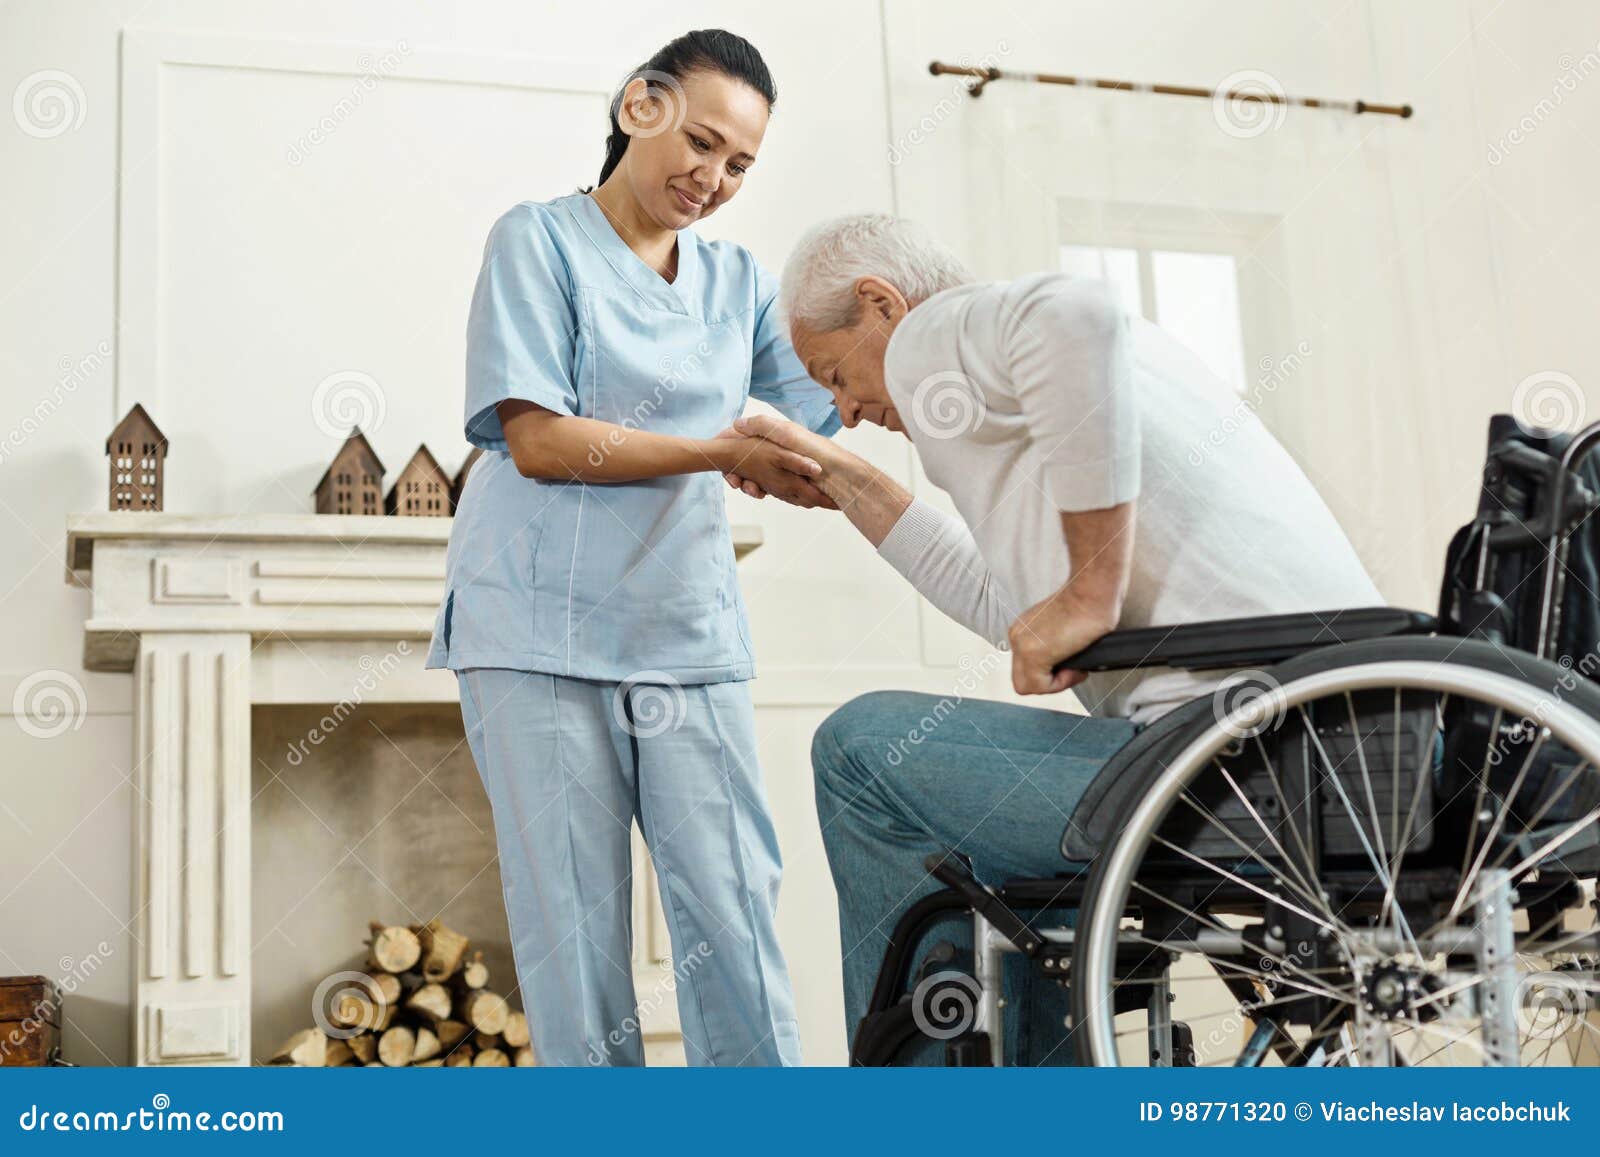 pleasant senior man holding caregivers hand